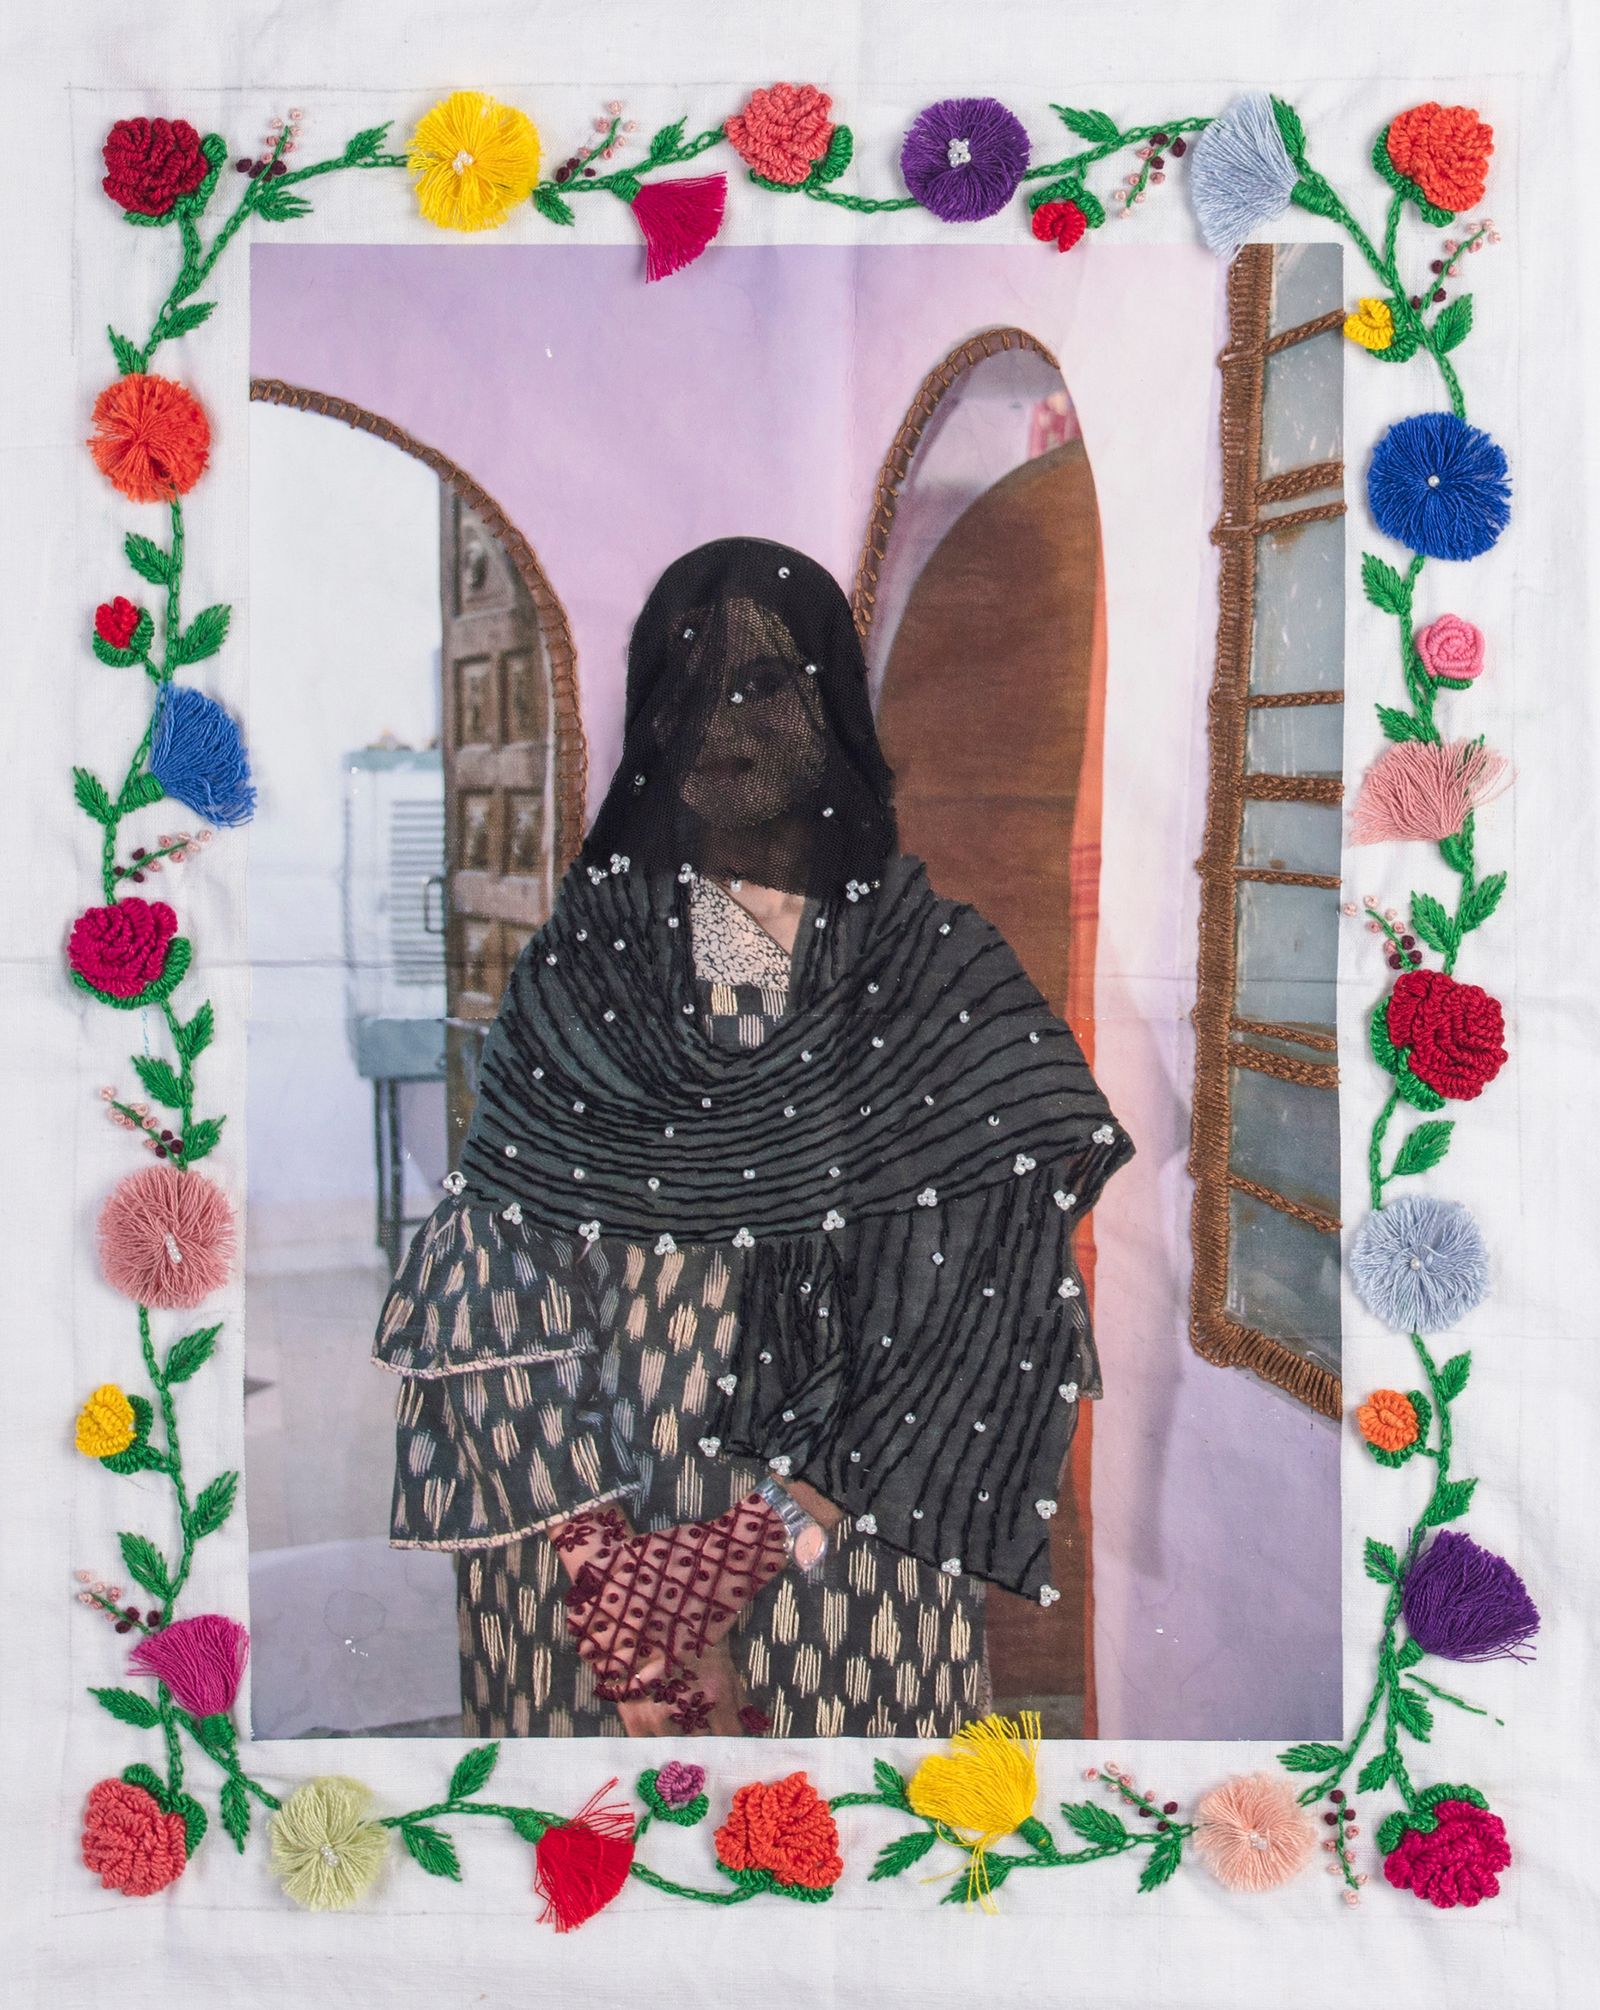 © Spandita Malik - Fozia 2019 Medium: Photographic Transfer Print on Khadi, Embroidery Size: 19 x 23 inch